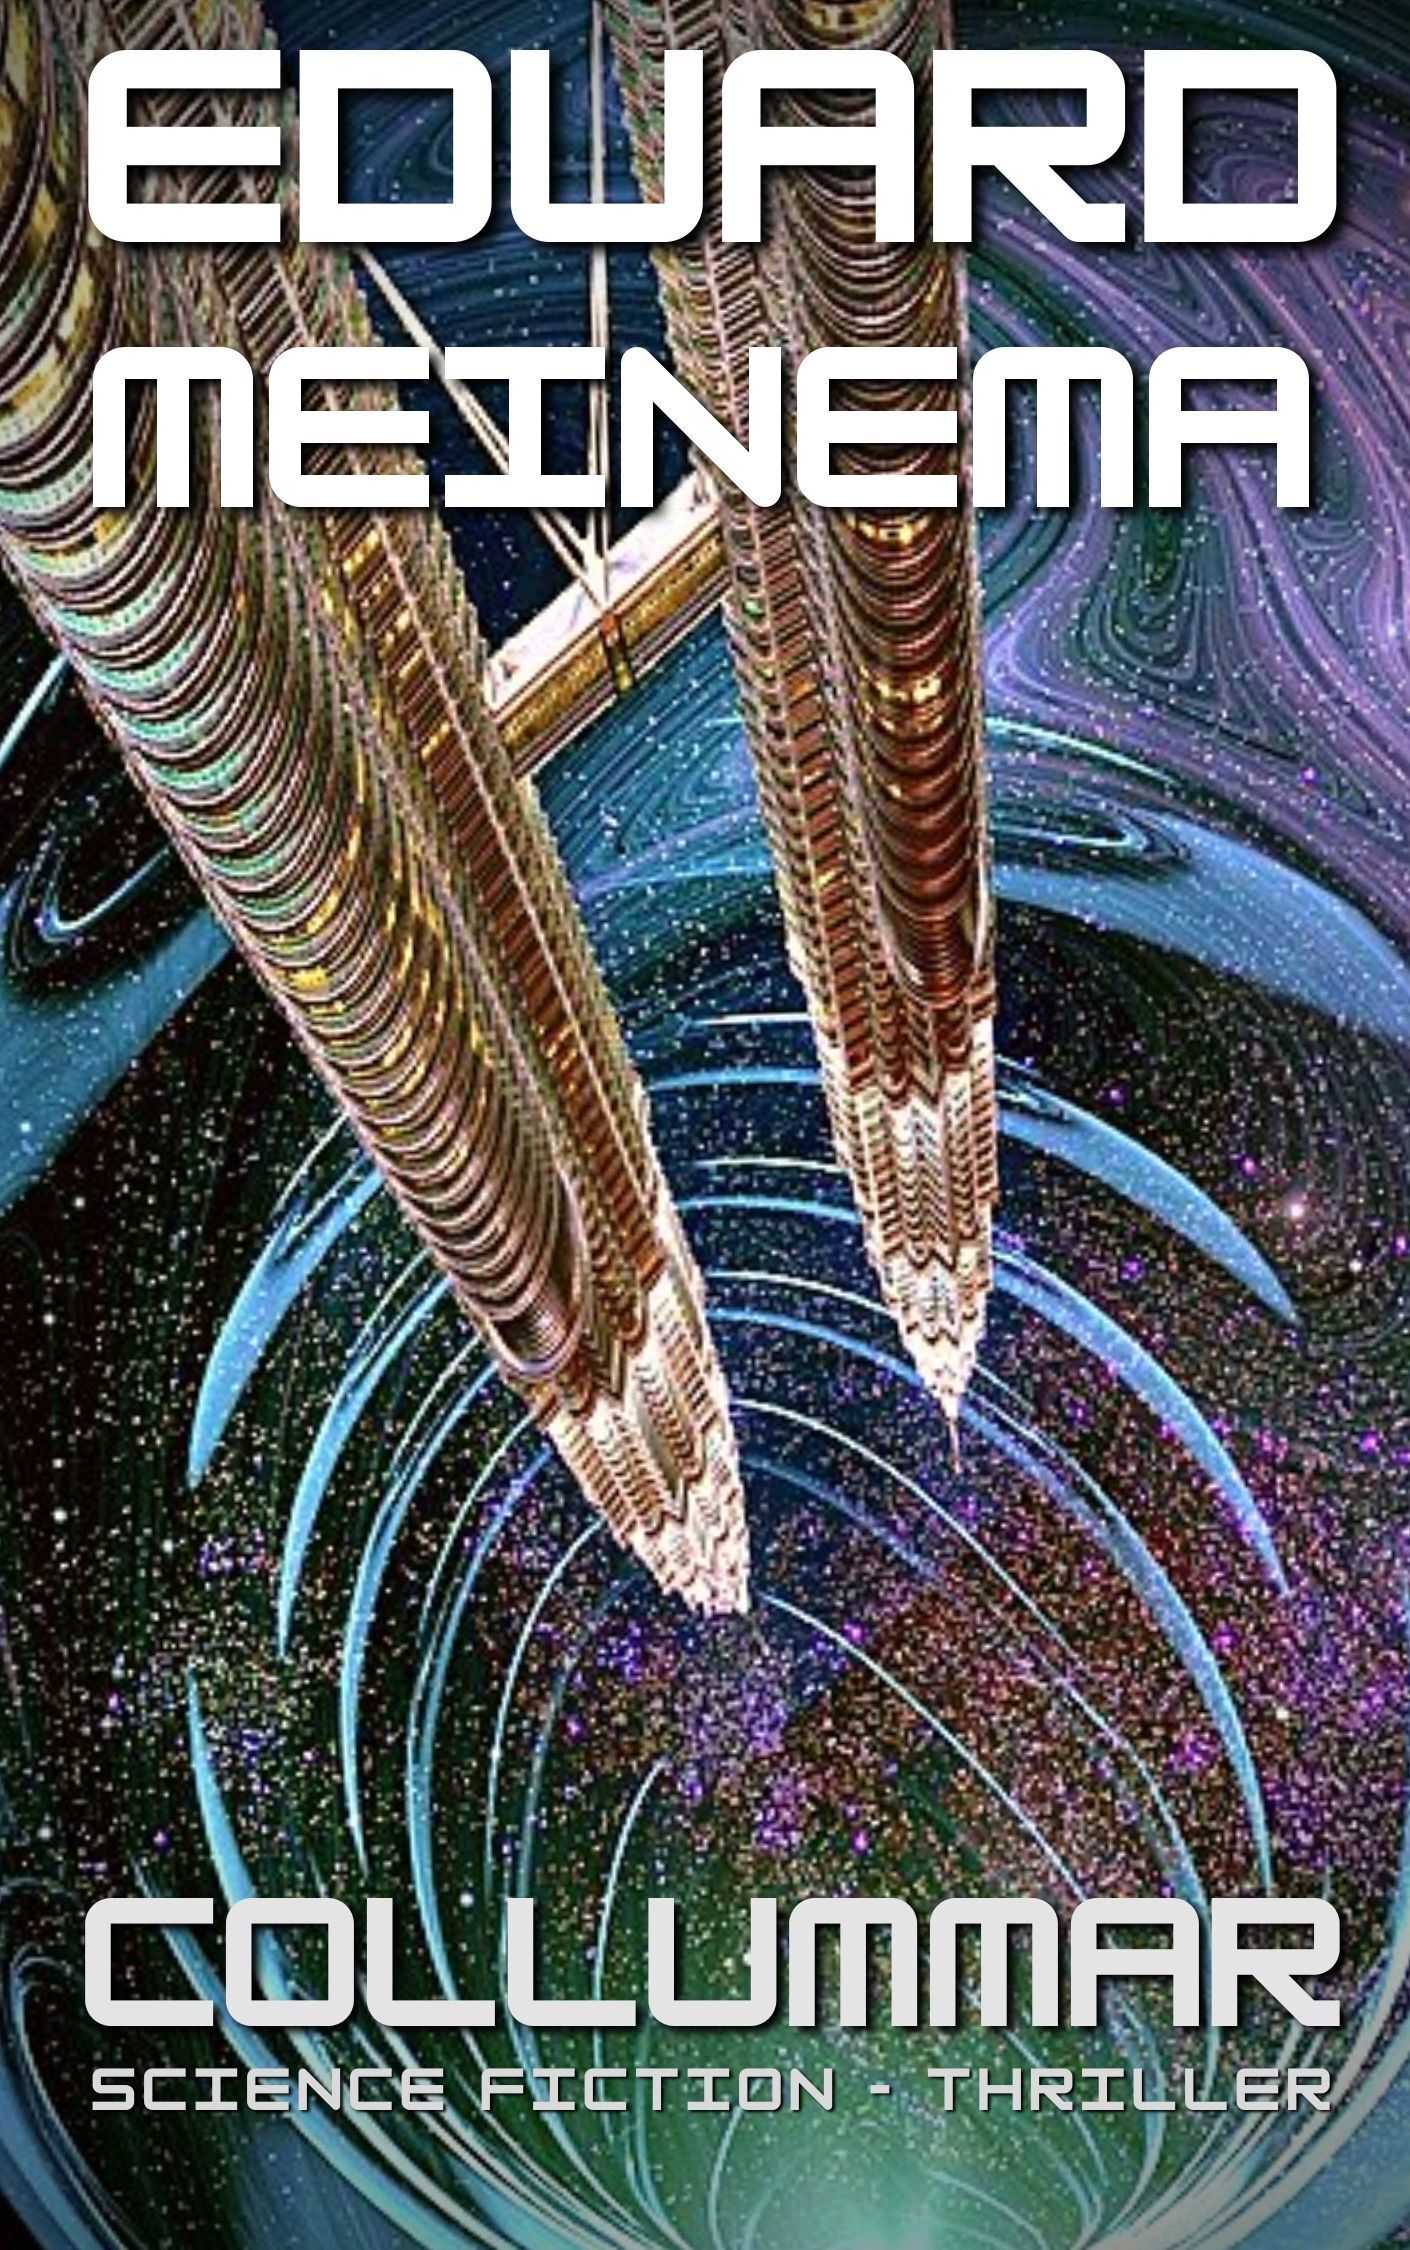 Collummar, Science Fiction novella by Eduard Meinema